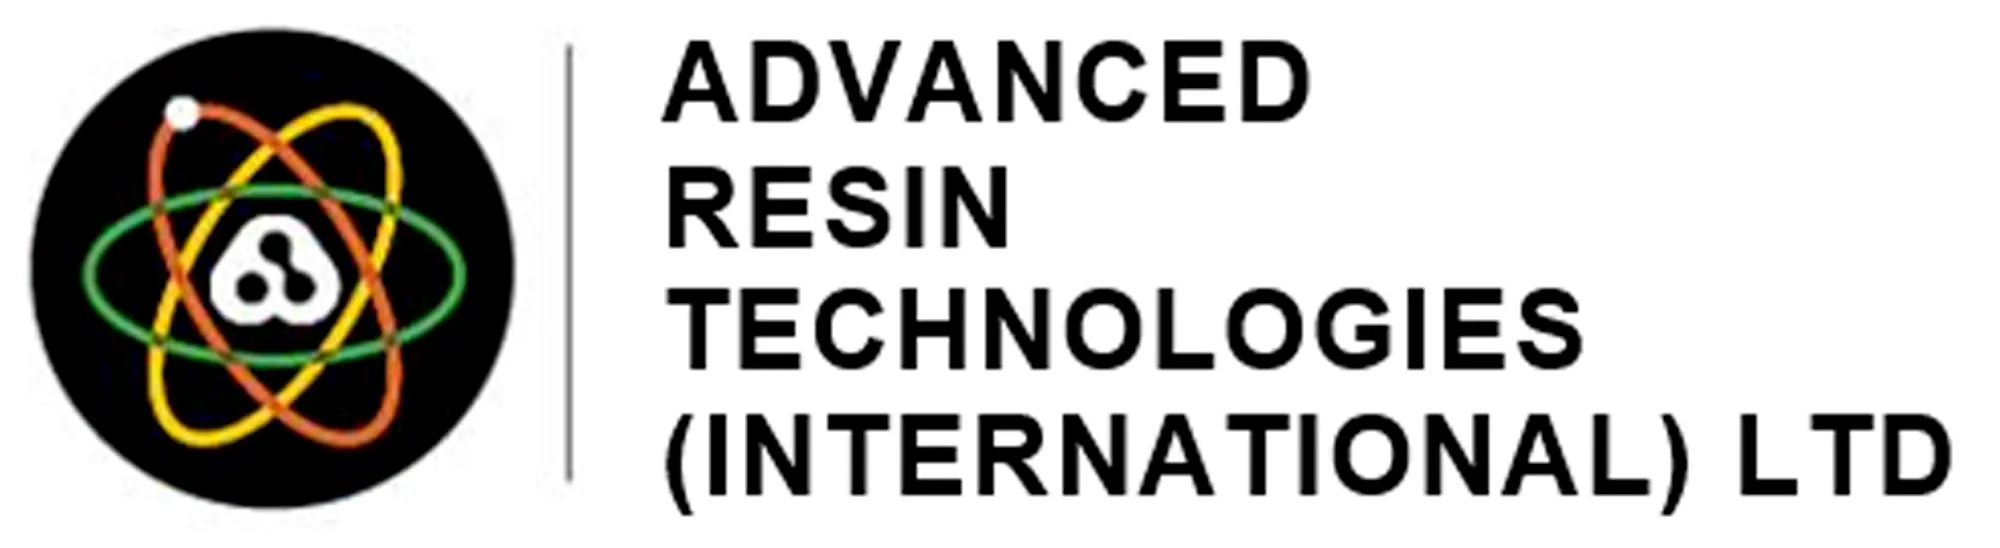 Advanced Resin Technologies International Ltd